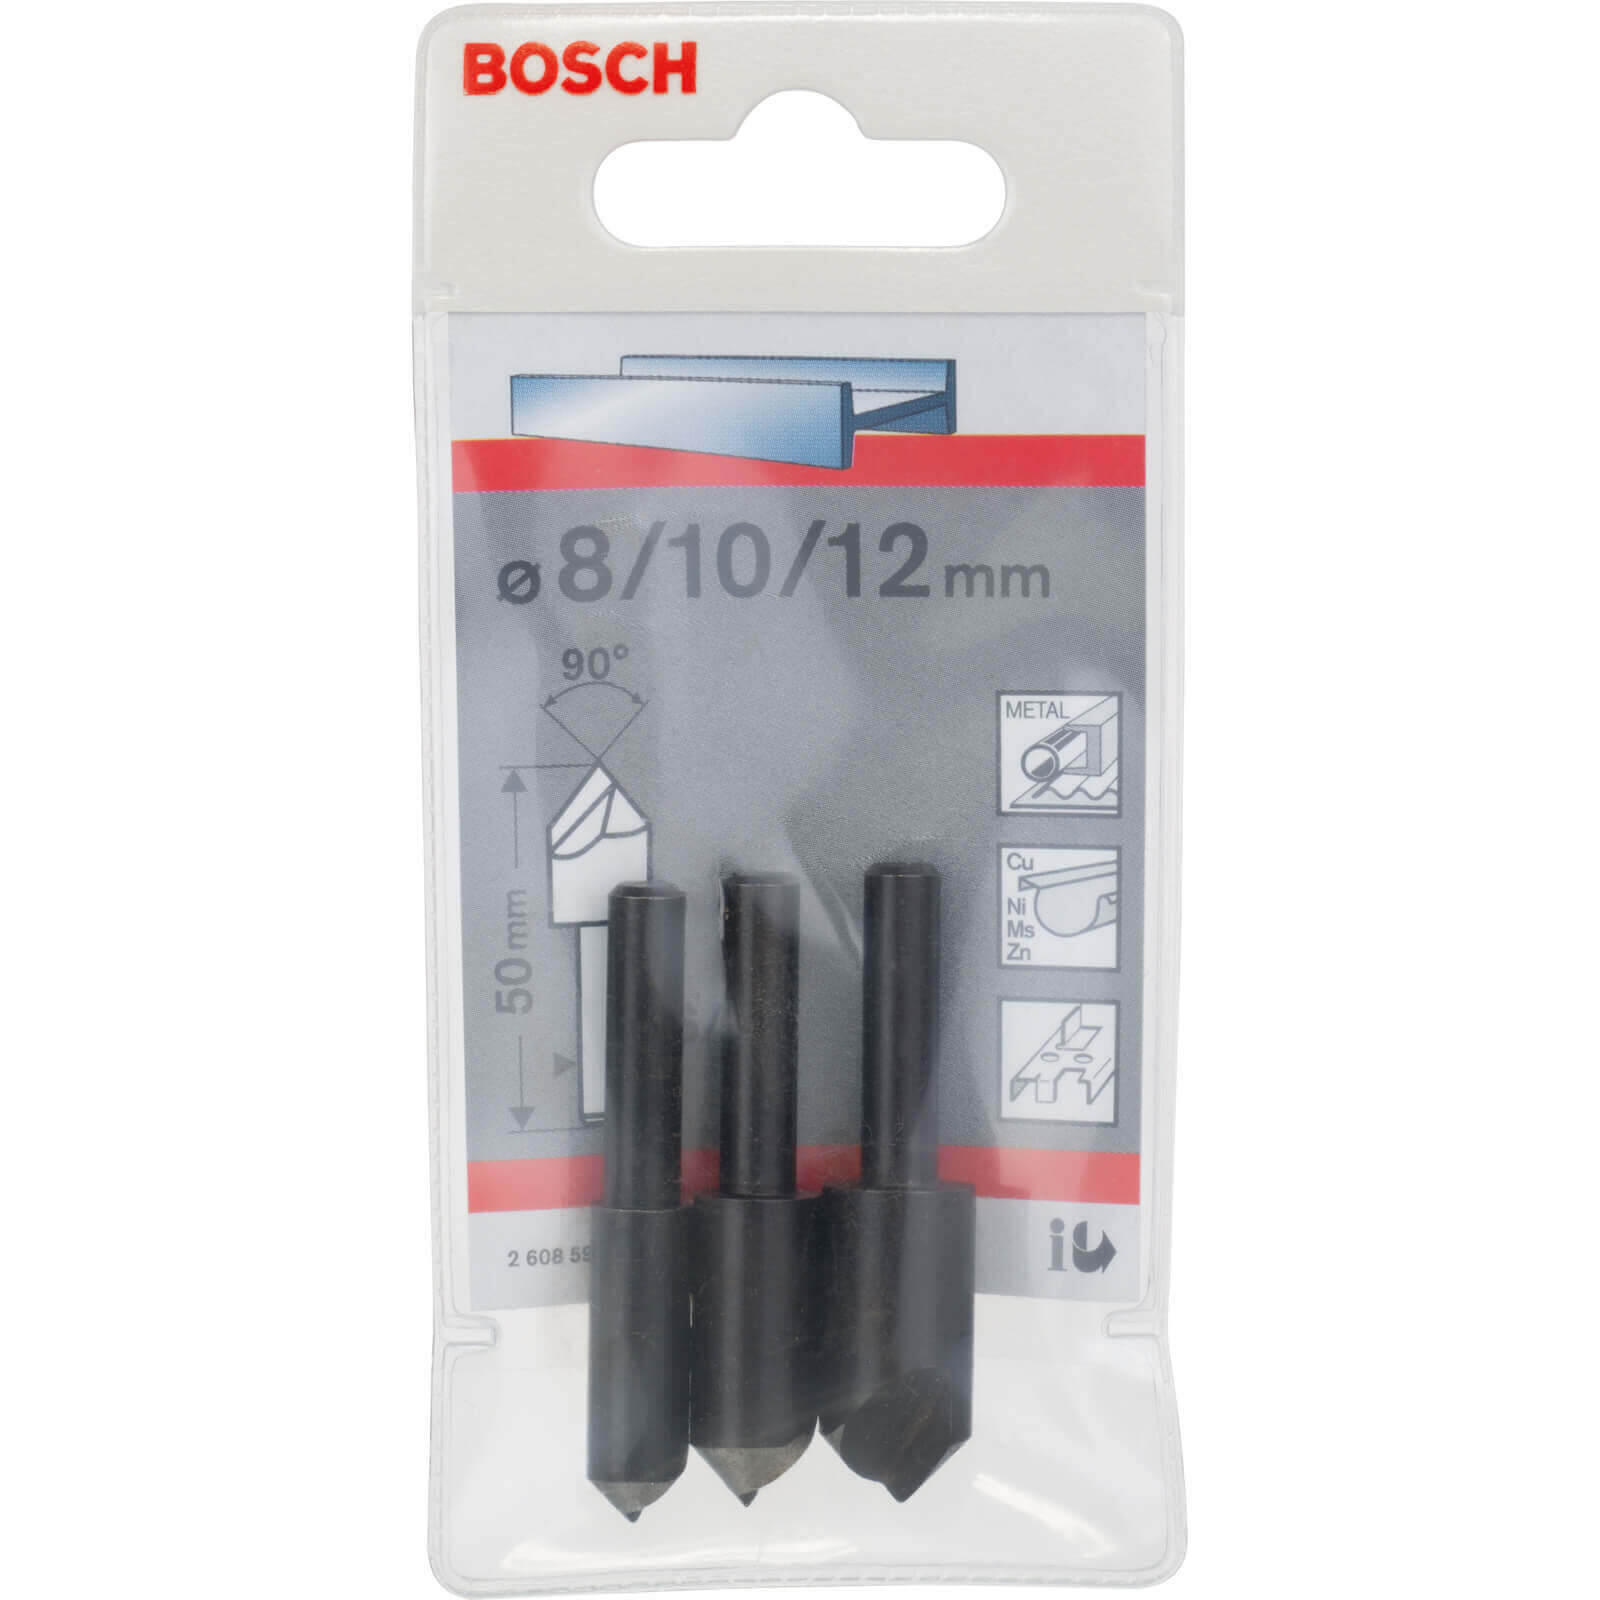 Image of Bosch 3 Piece Countersink Bit Set